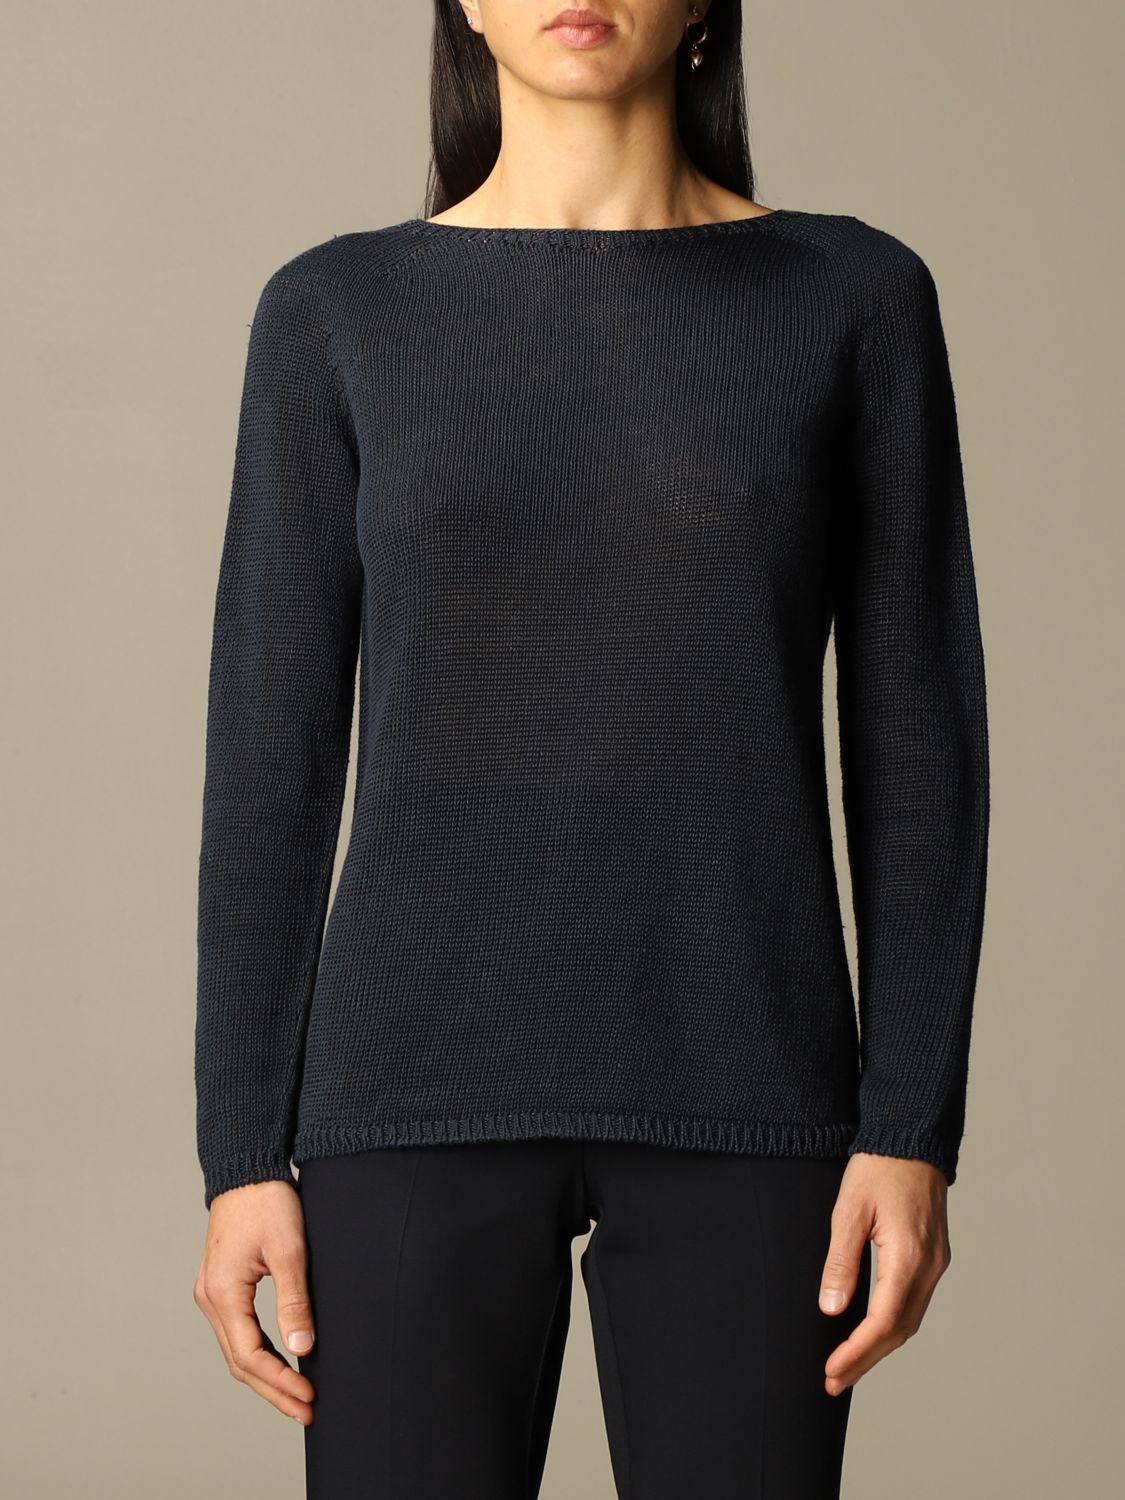 S MAX MARA: linen sweater - Blue | S Max Mara sweater 93610612600 ...